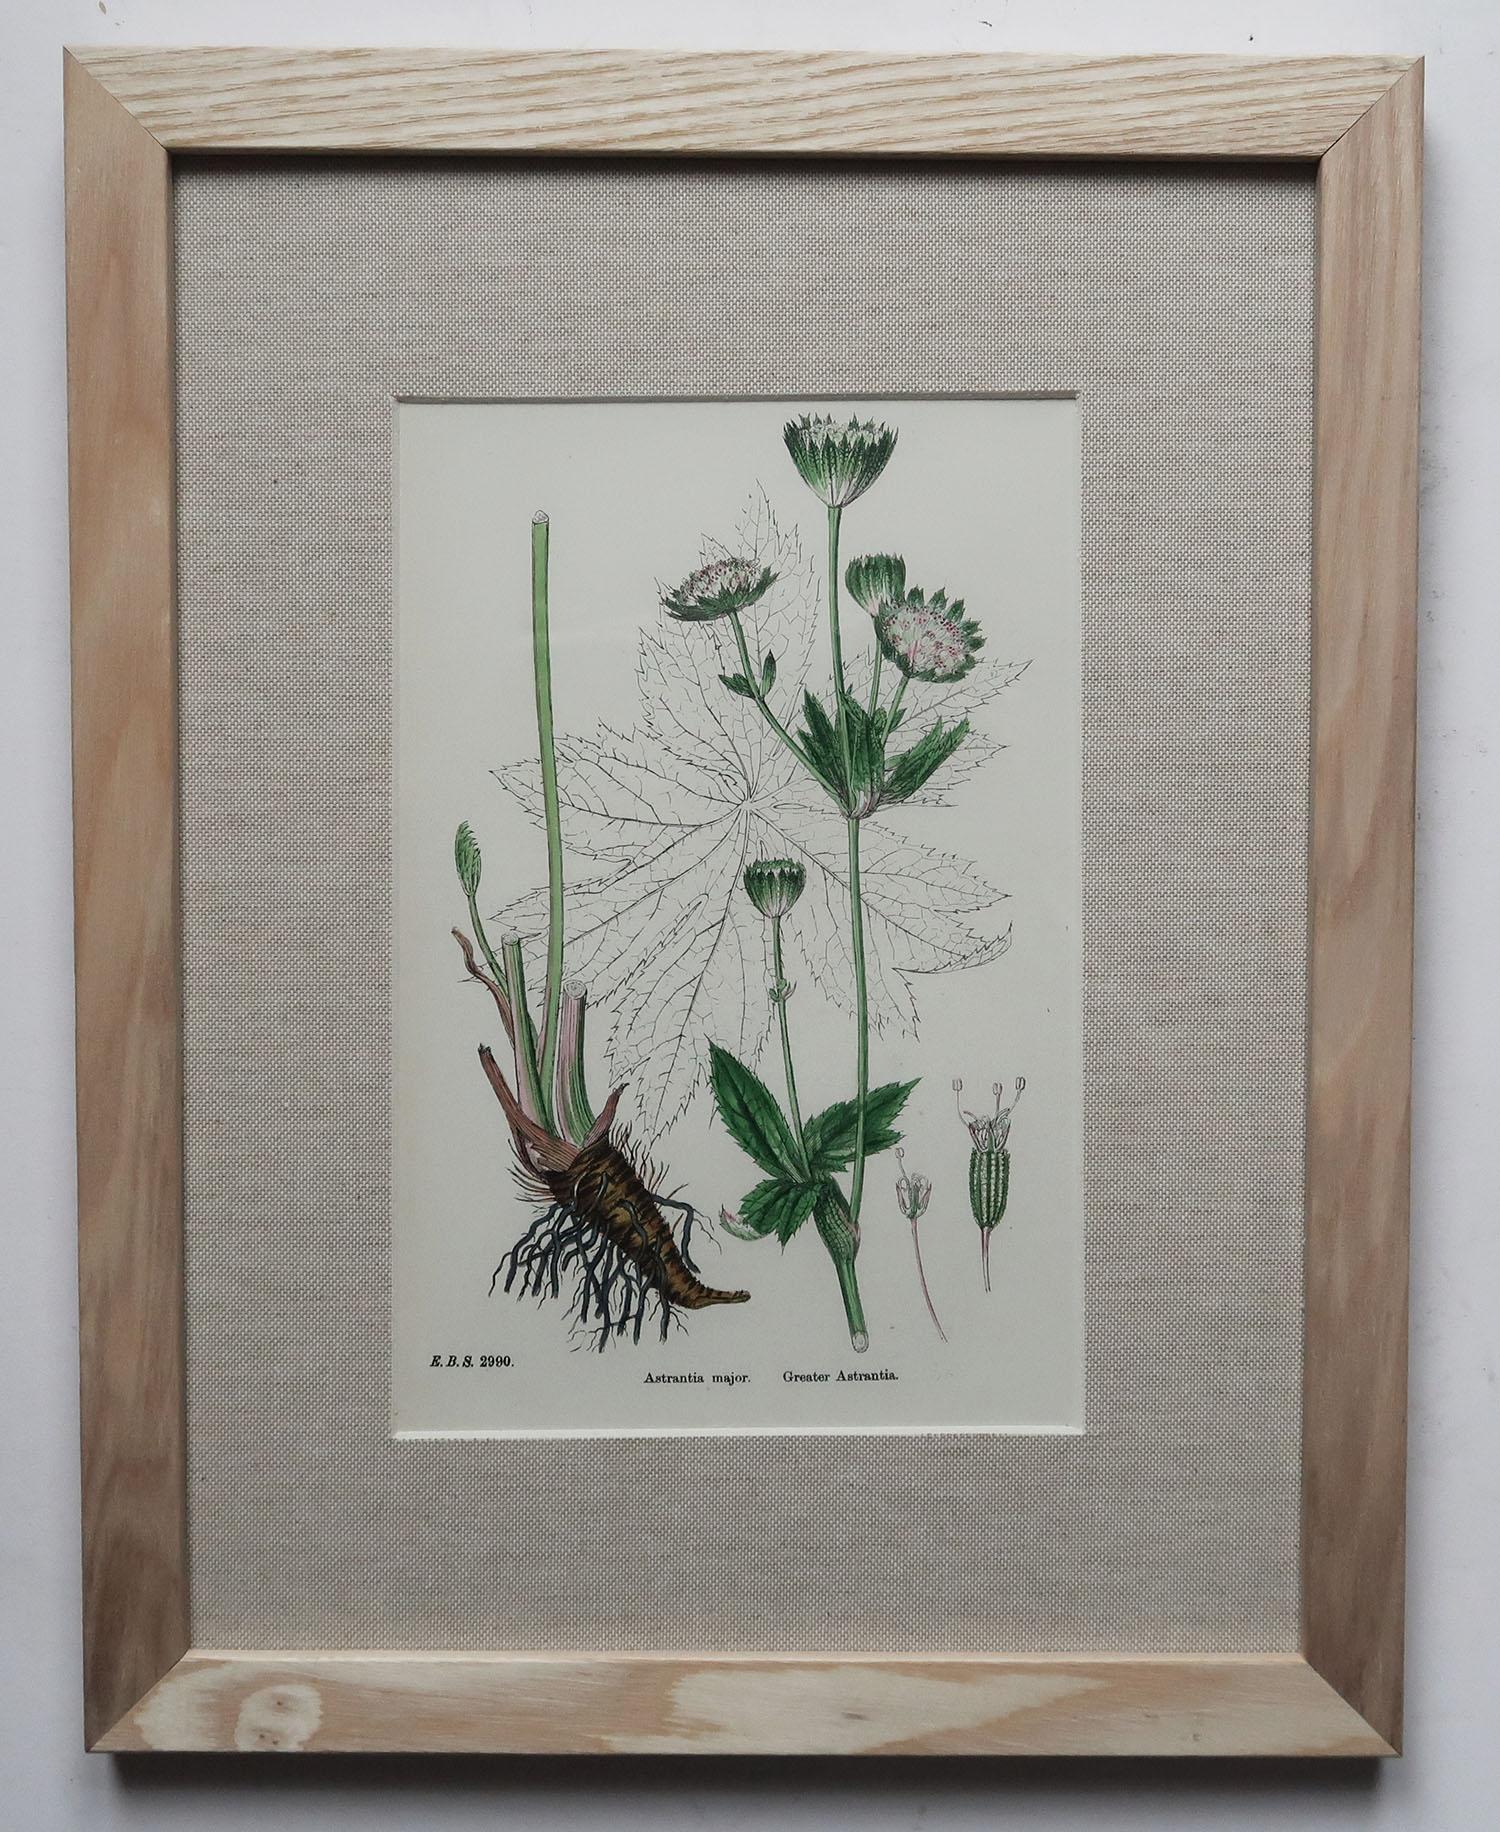 Faux Bamboo Set of 15 Original Antique Botanical Prints in Ash Frames, C.1850